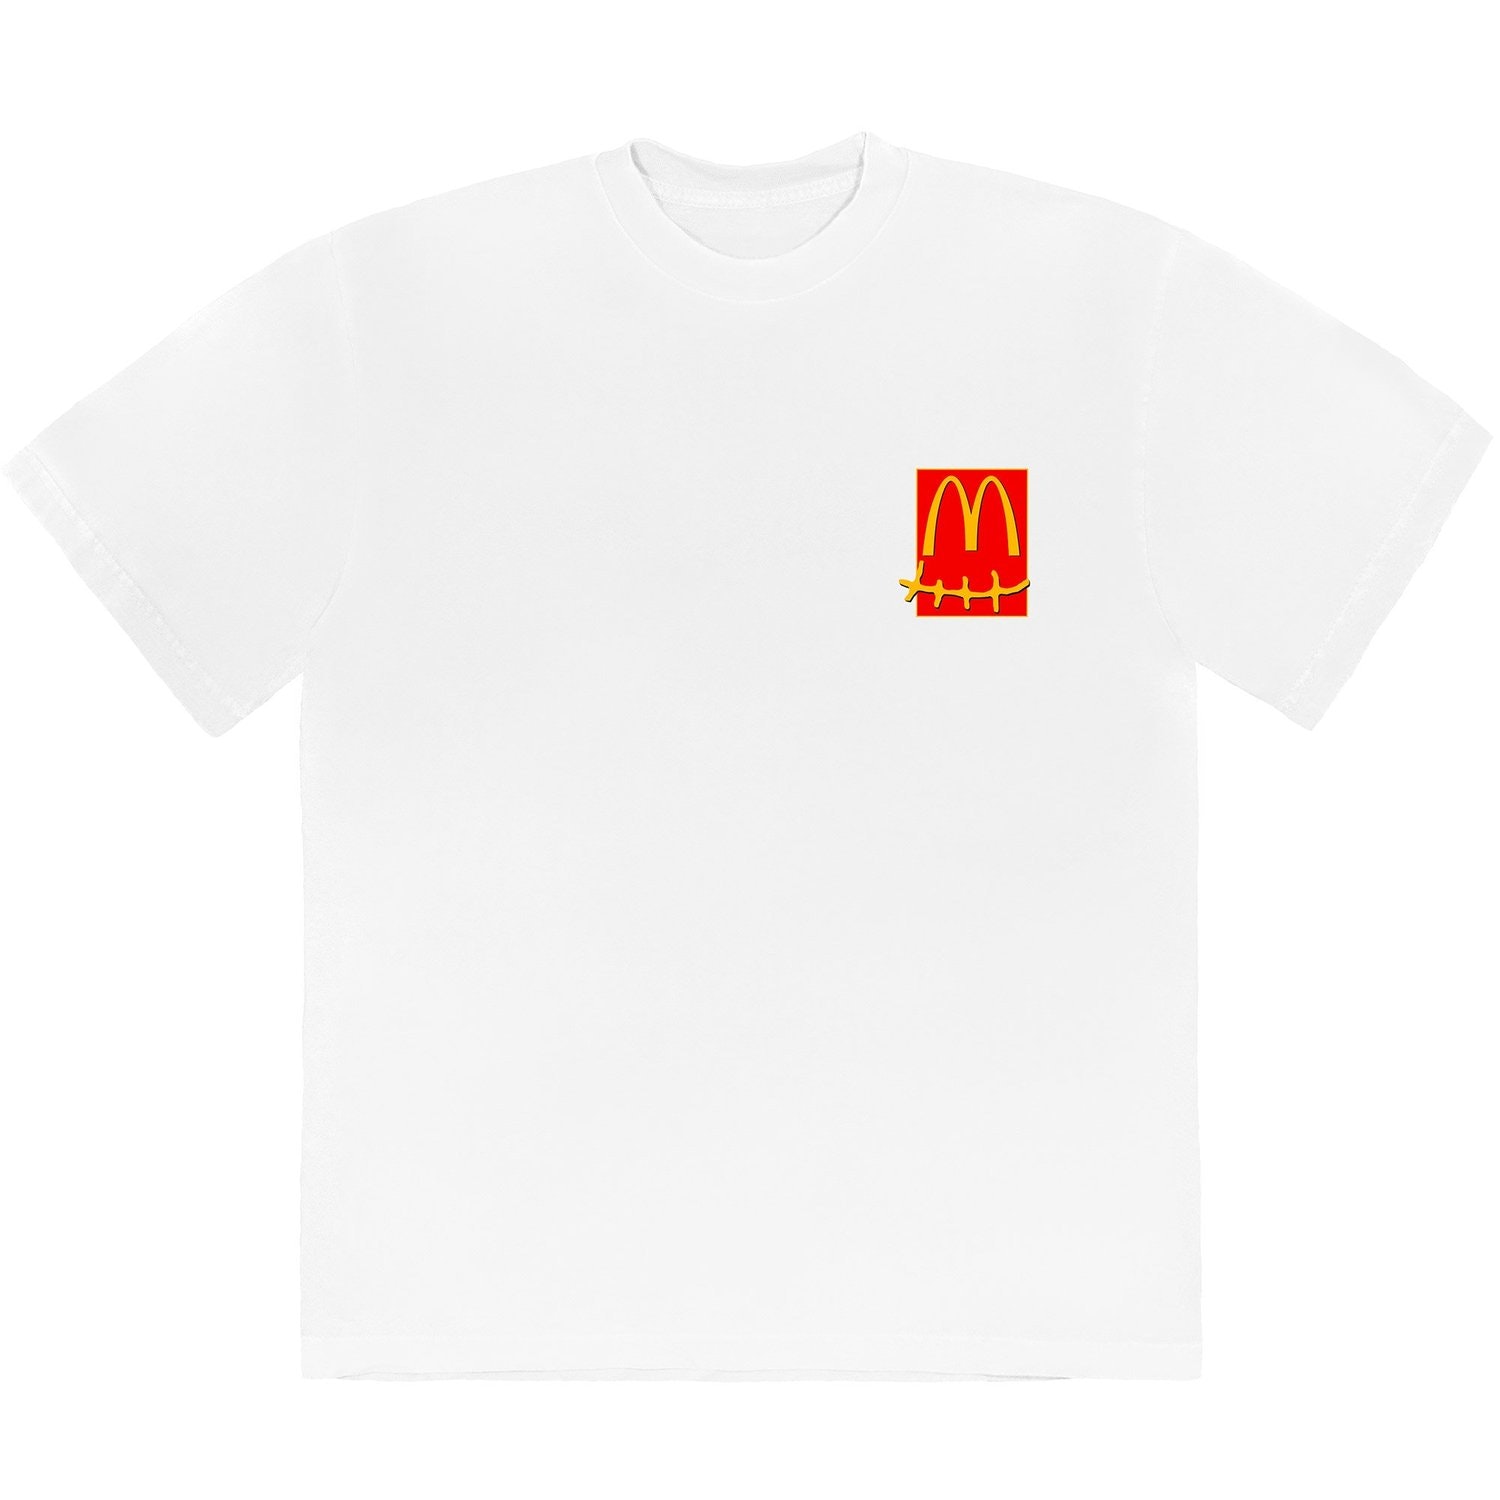 Travis Scott x McDonald's Action Figure Series T-Shirt White - FW20